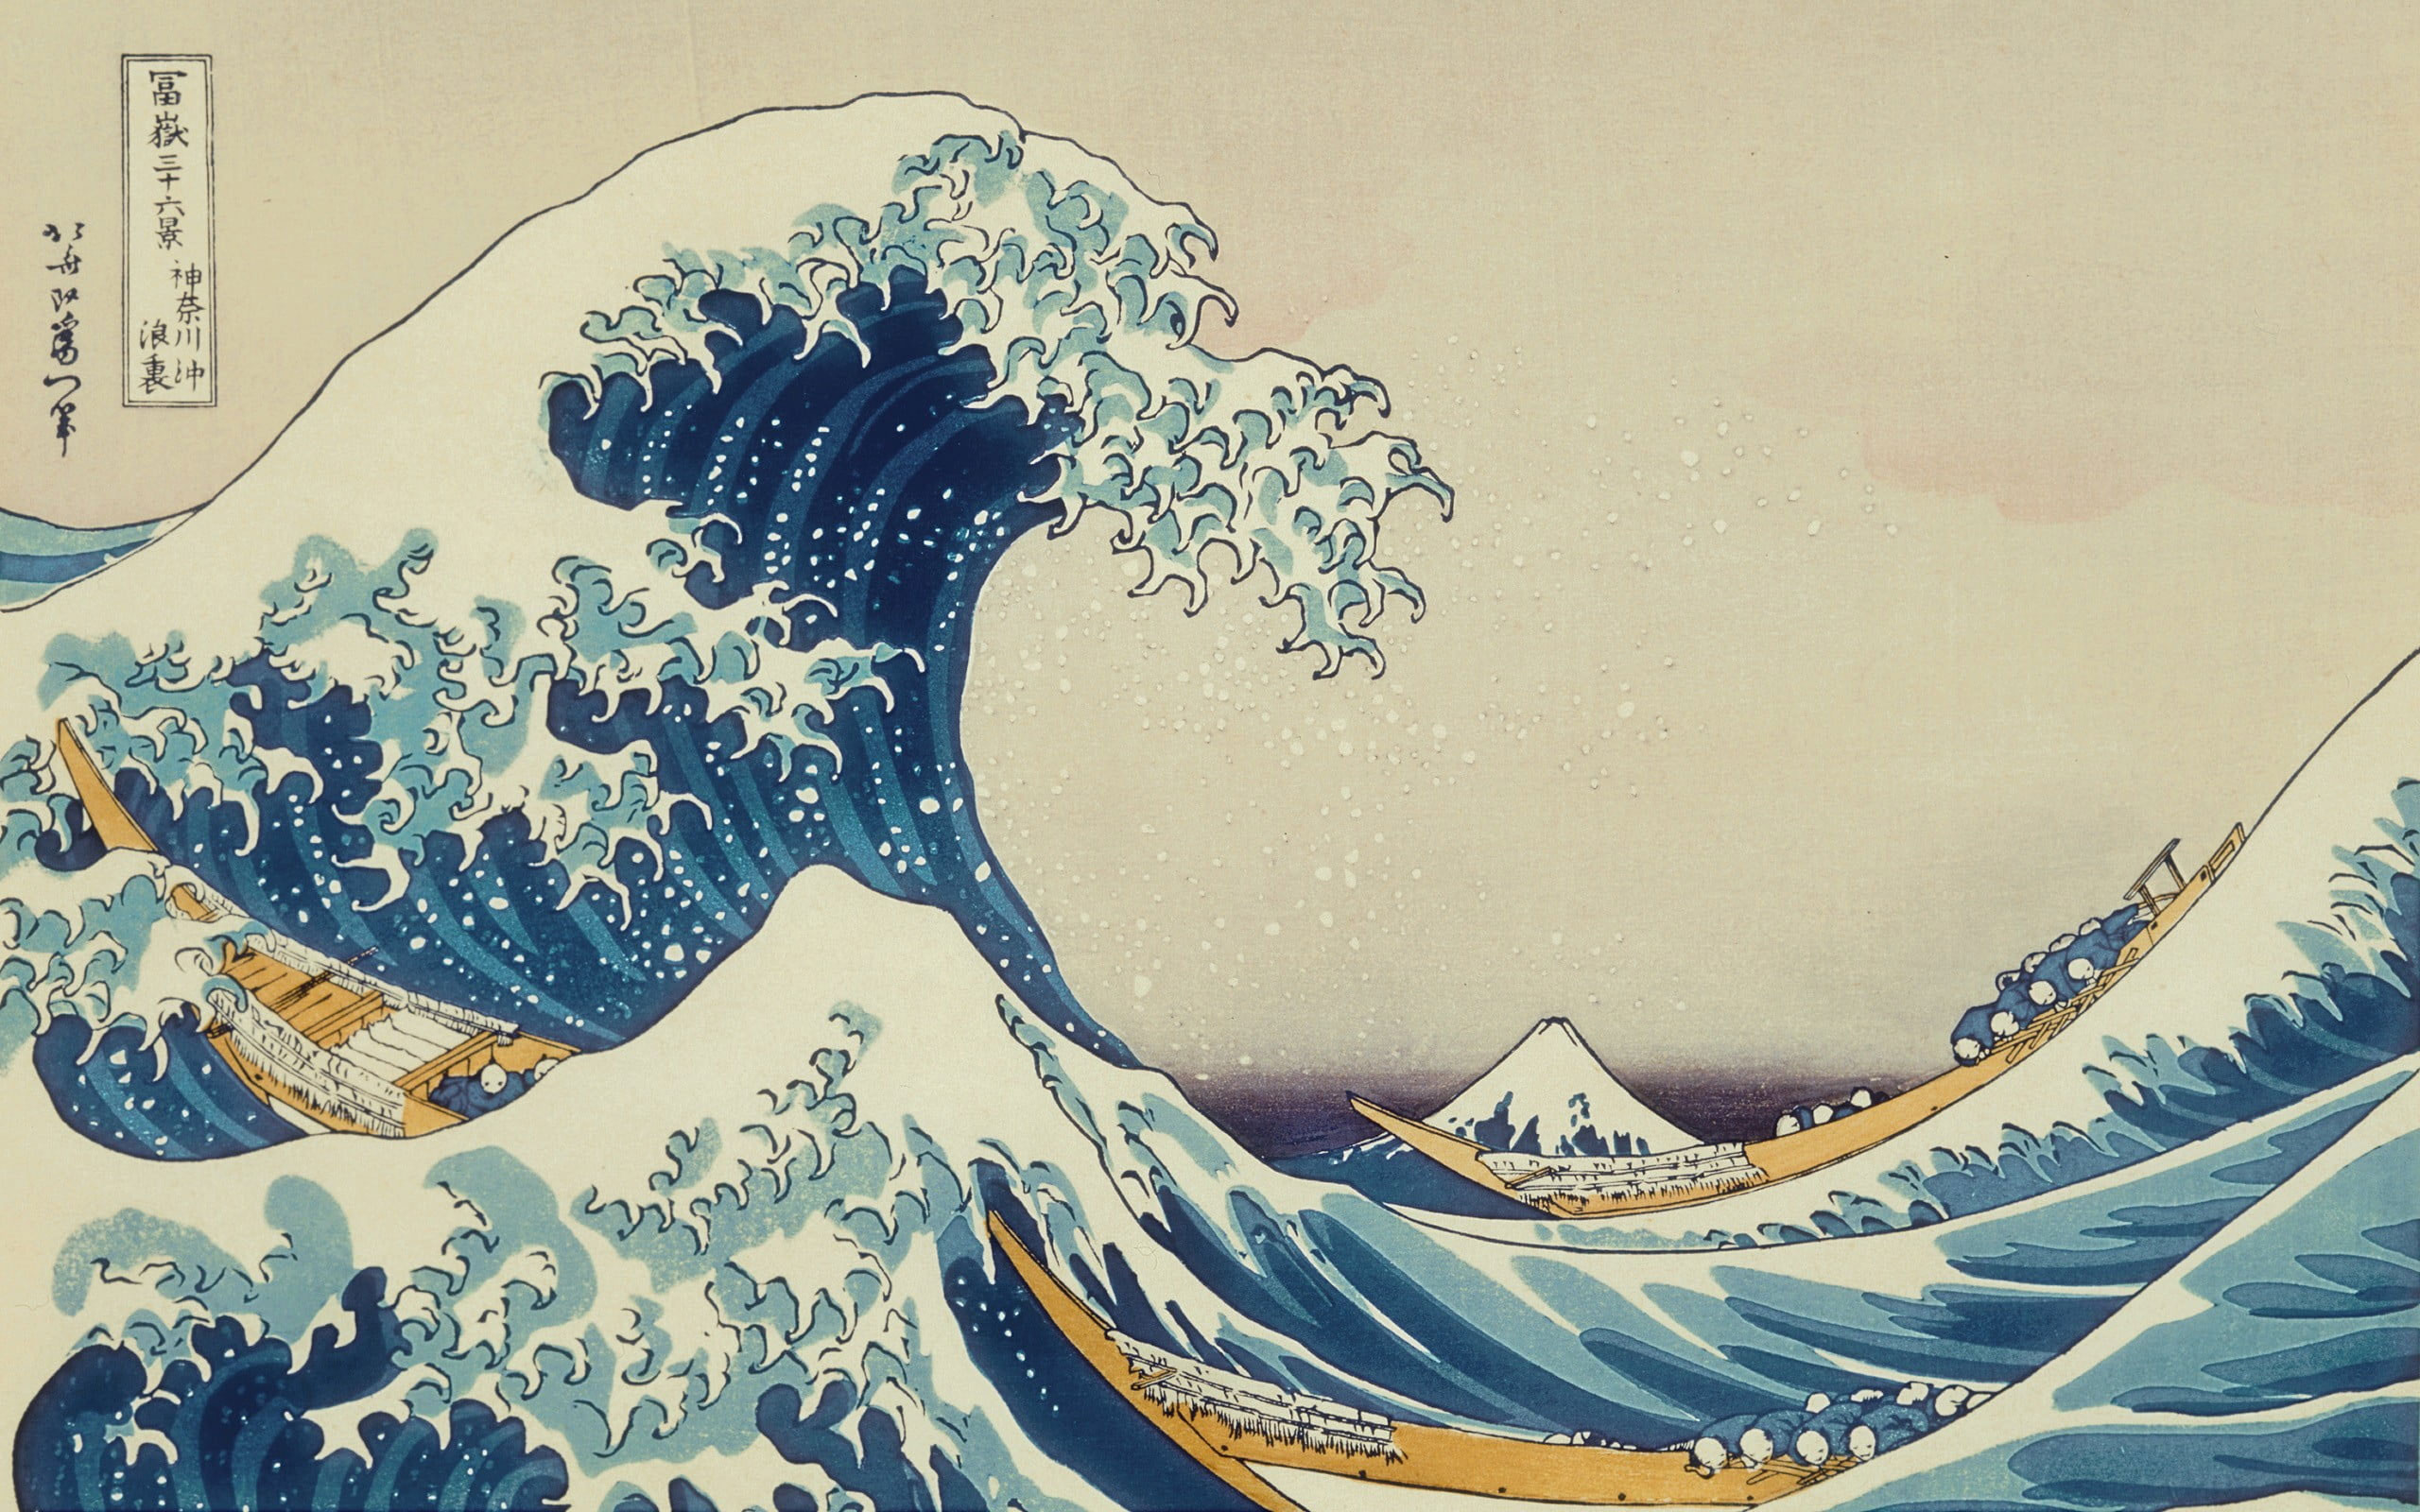 The Great Wave off Kanagawa painting wallpaper, waves, Japanese, classic art